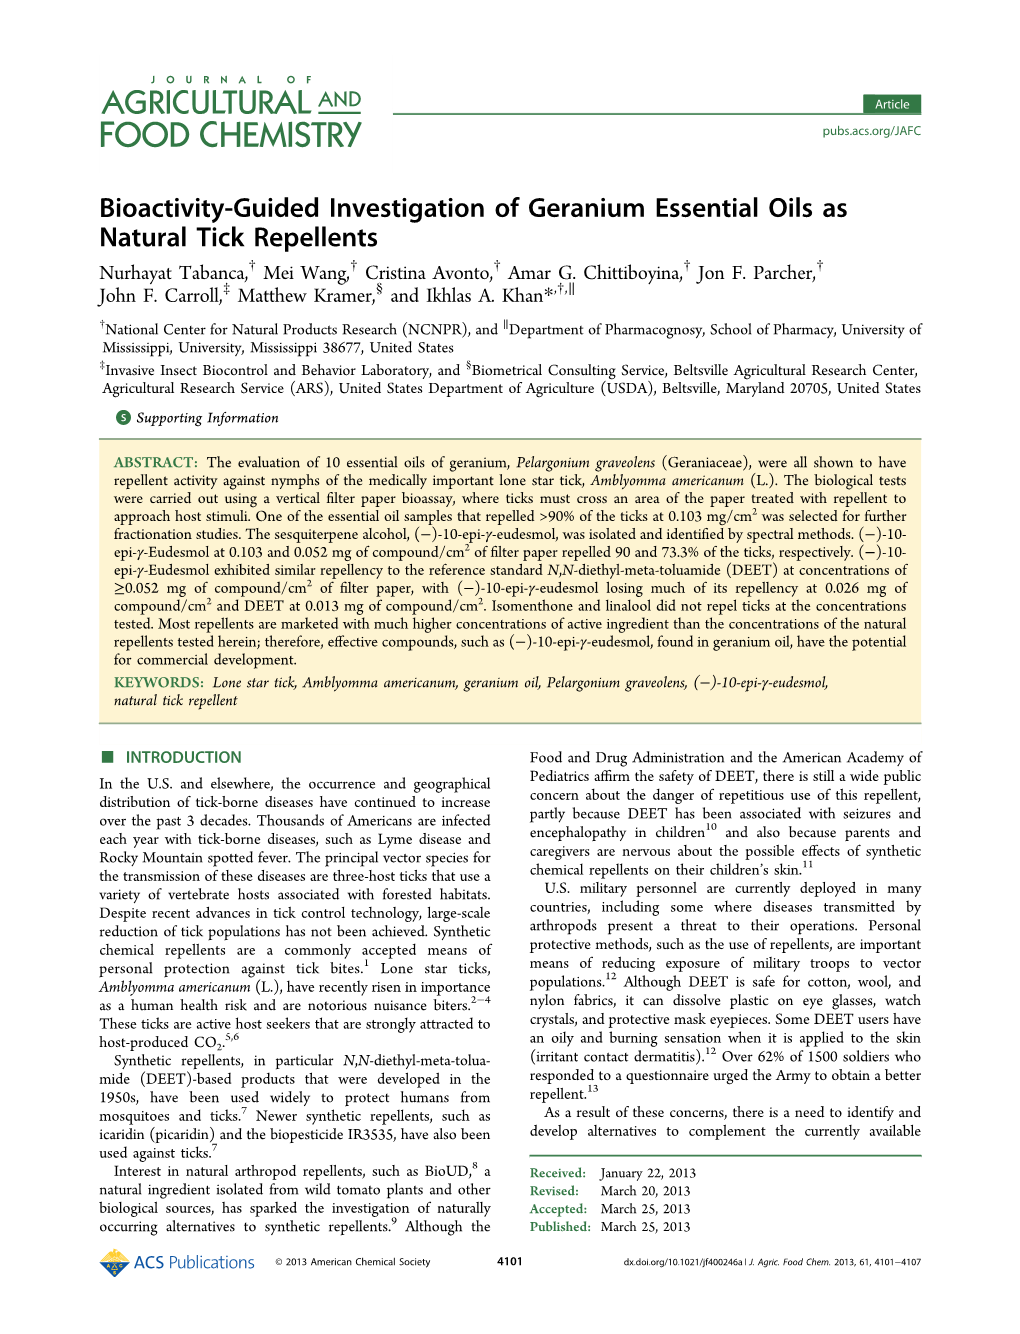 Bioactivity-Guided Investigation of Geranium Essential Oils As Natural Tick Repellents † † † † † Nurhayat Tabanca, Mei Wang, Cristina Avonto, Amar G